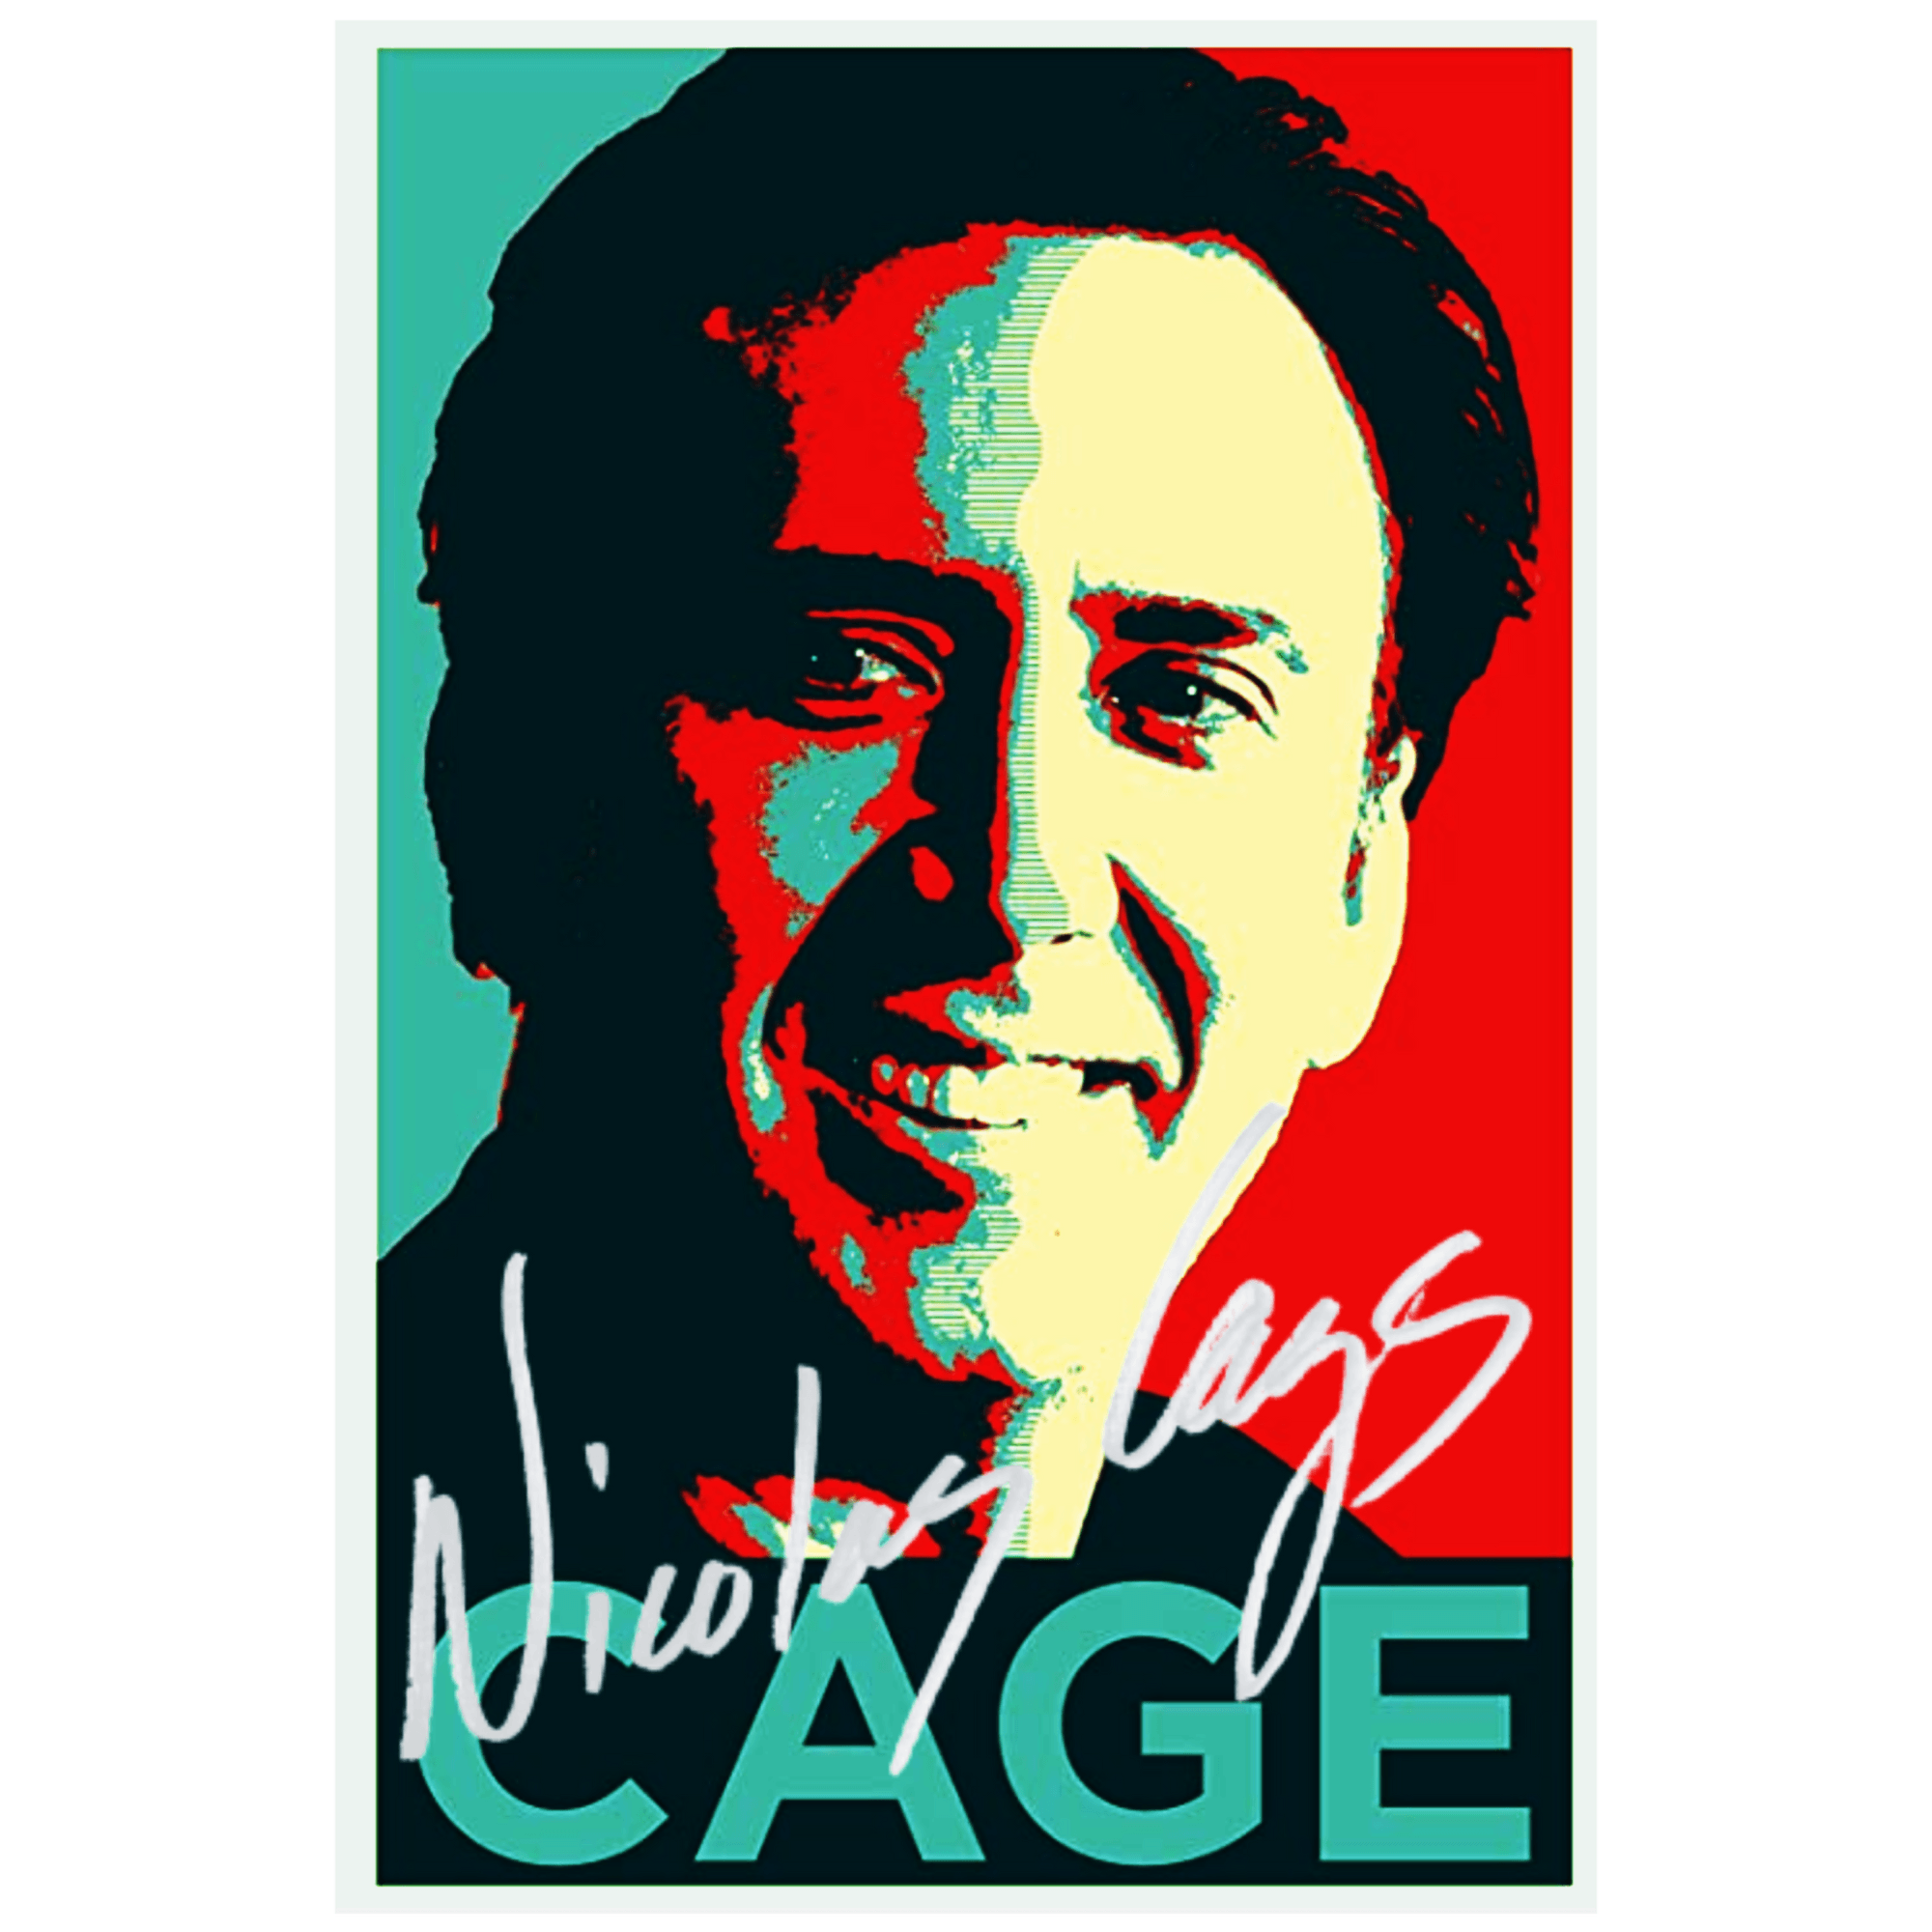 Nicolas Cage Funny Faces & Sginature - Crypto Art Meme - Nicholas